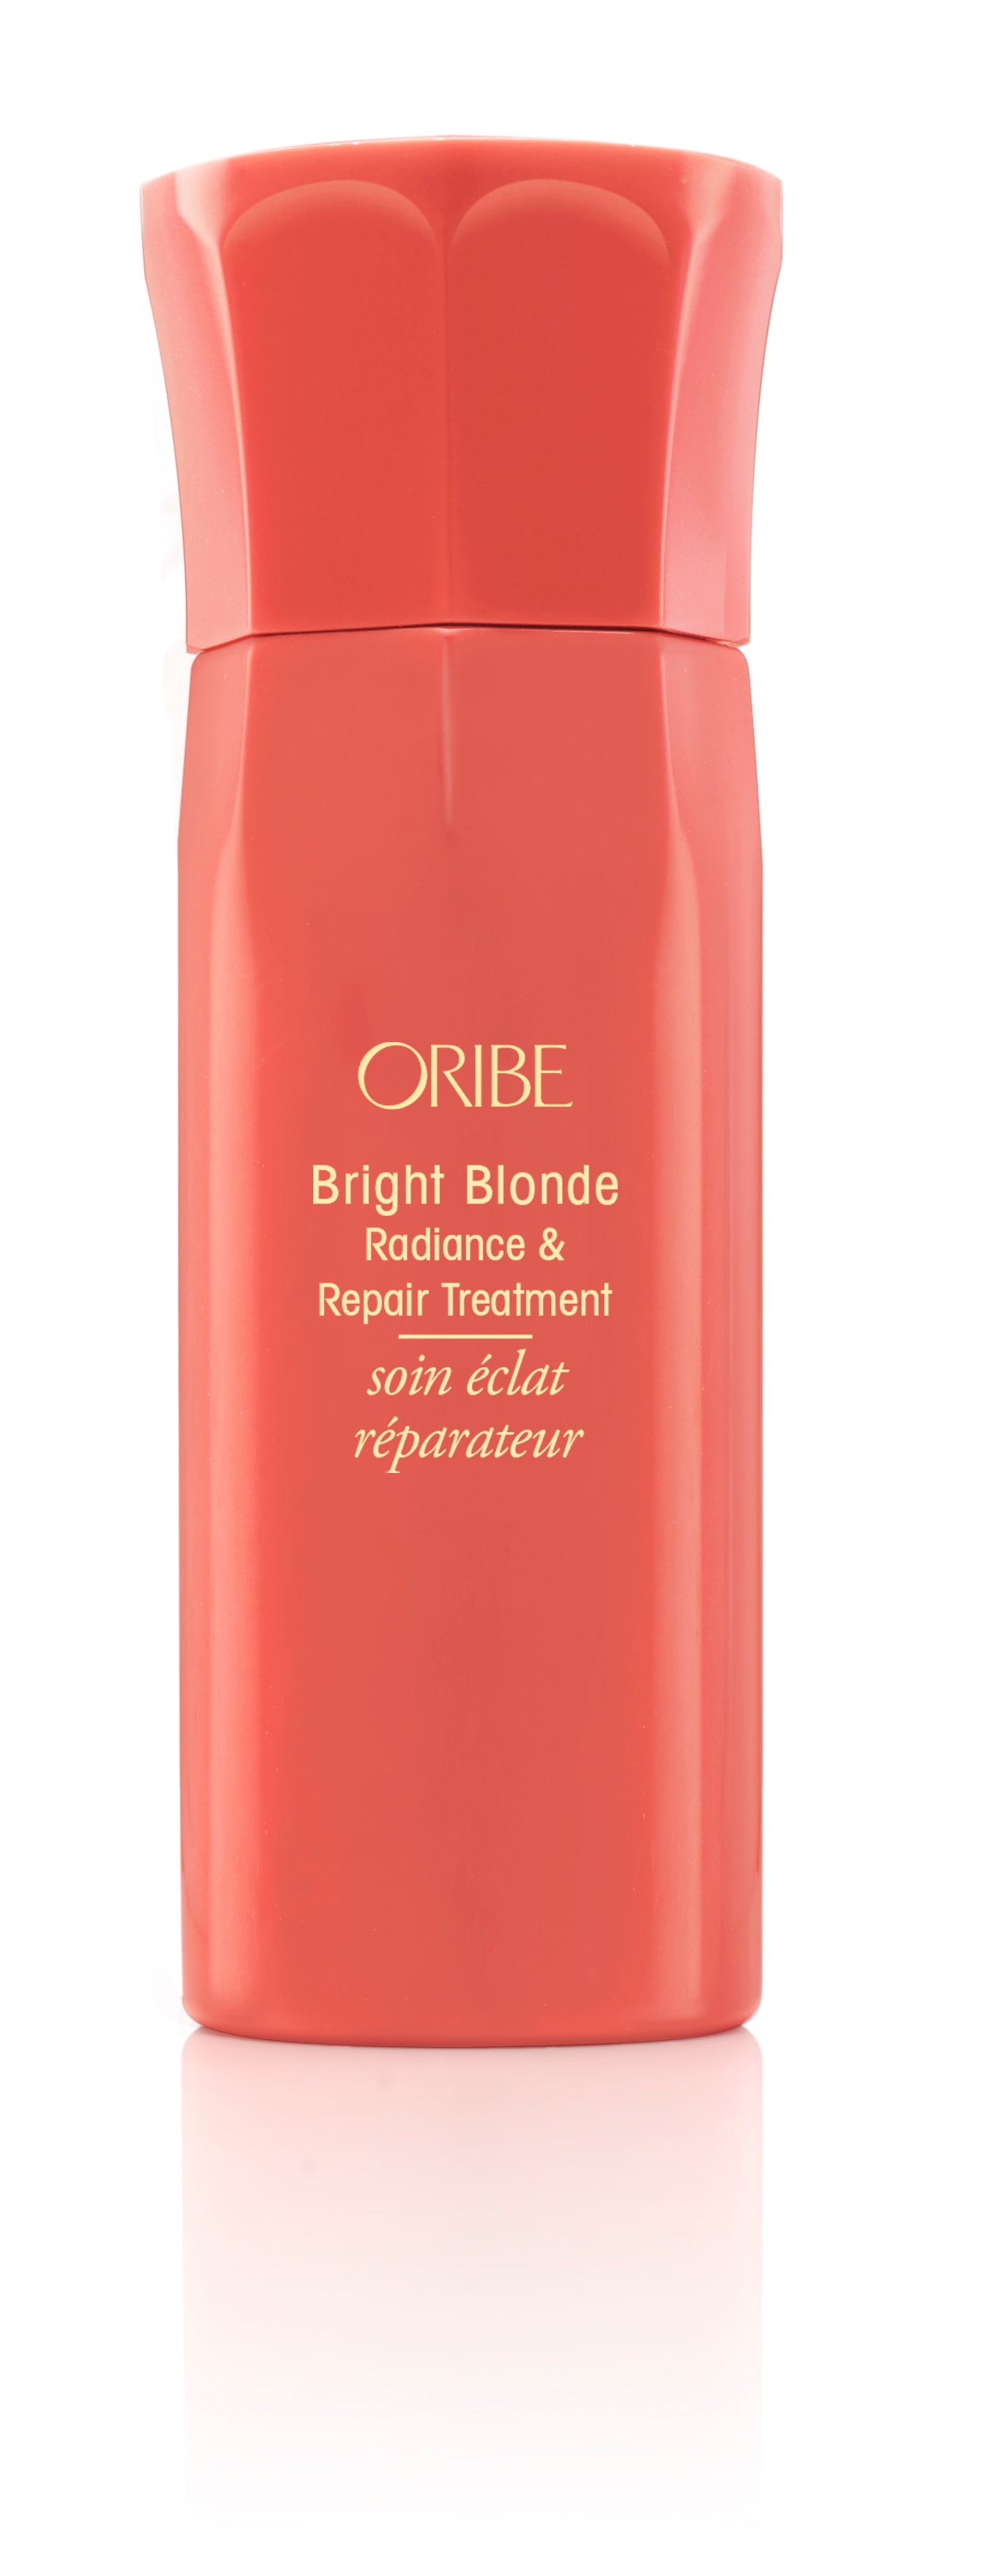 *Old Formula* Oribe Bright Blonde Radiance & Repair Treatment